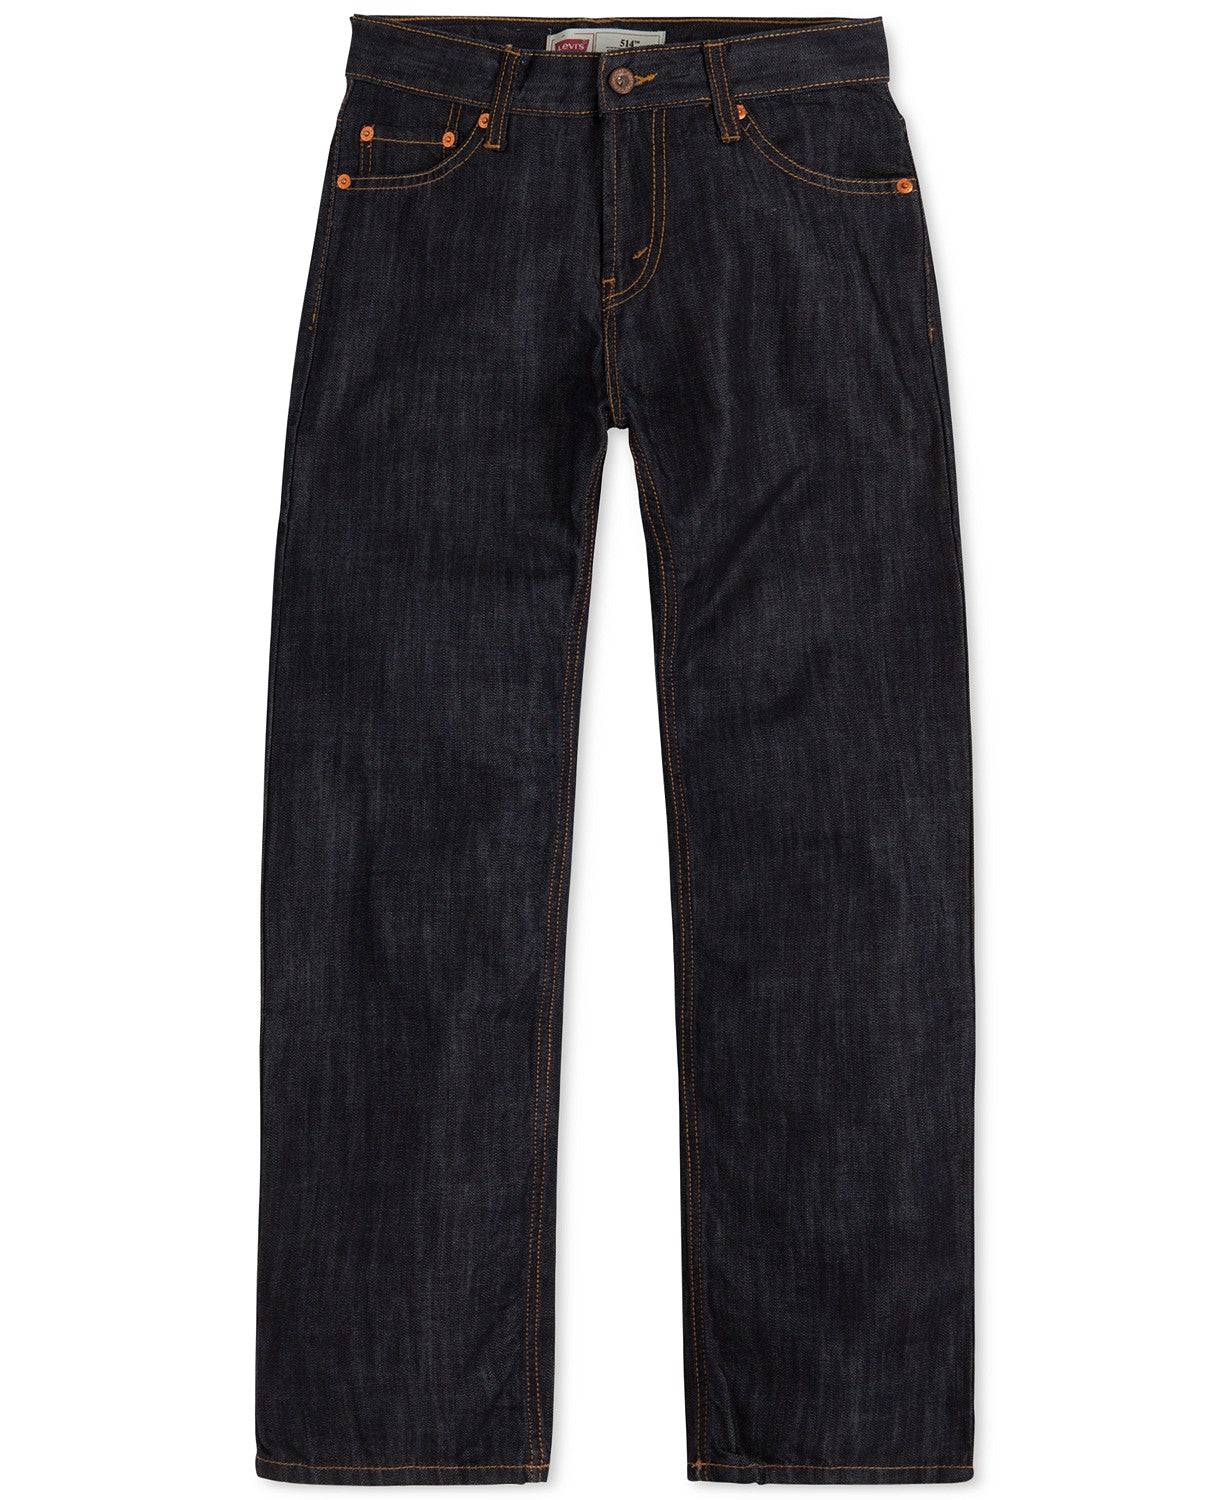 Levi's 514™ Straight Fit Jeans, Big Boys Husky - Reid's Outlet